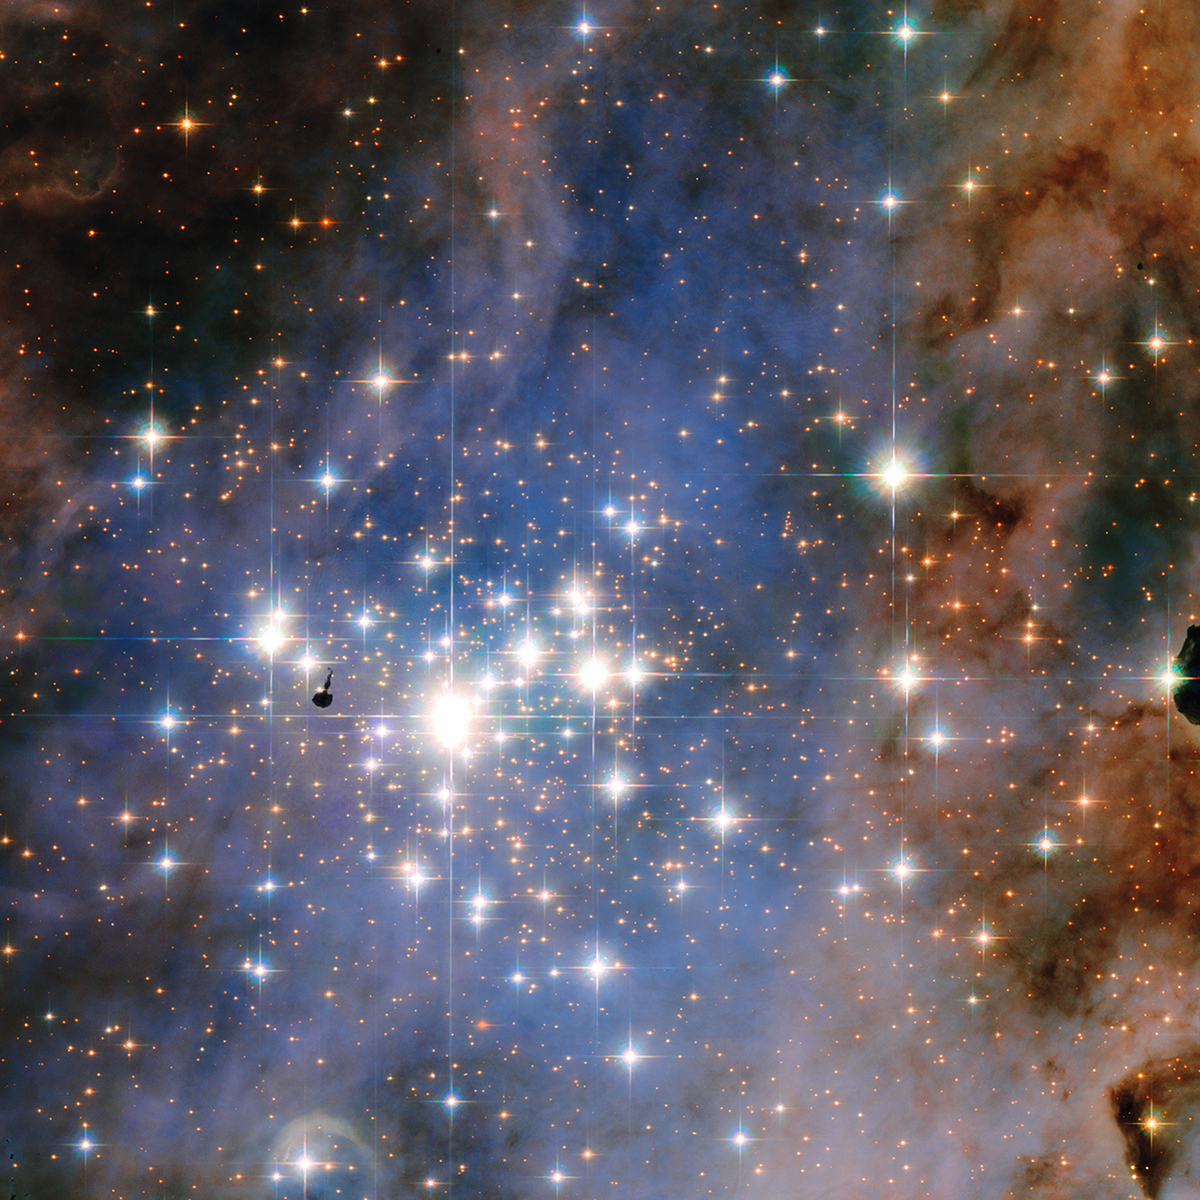 july-29-2019-star-cluster-trumpler-14.jpg